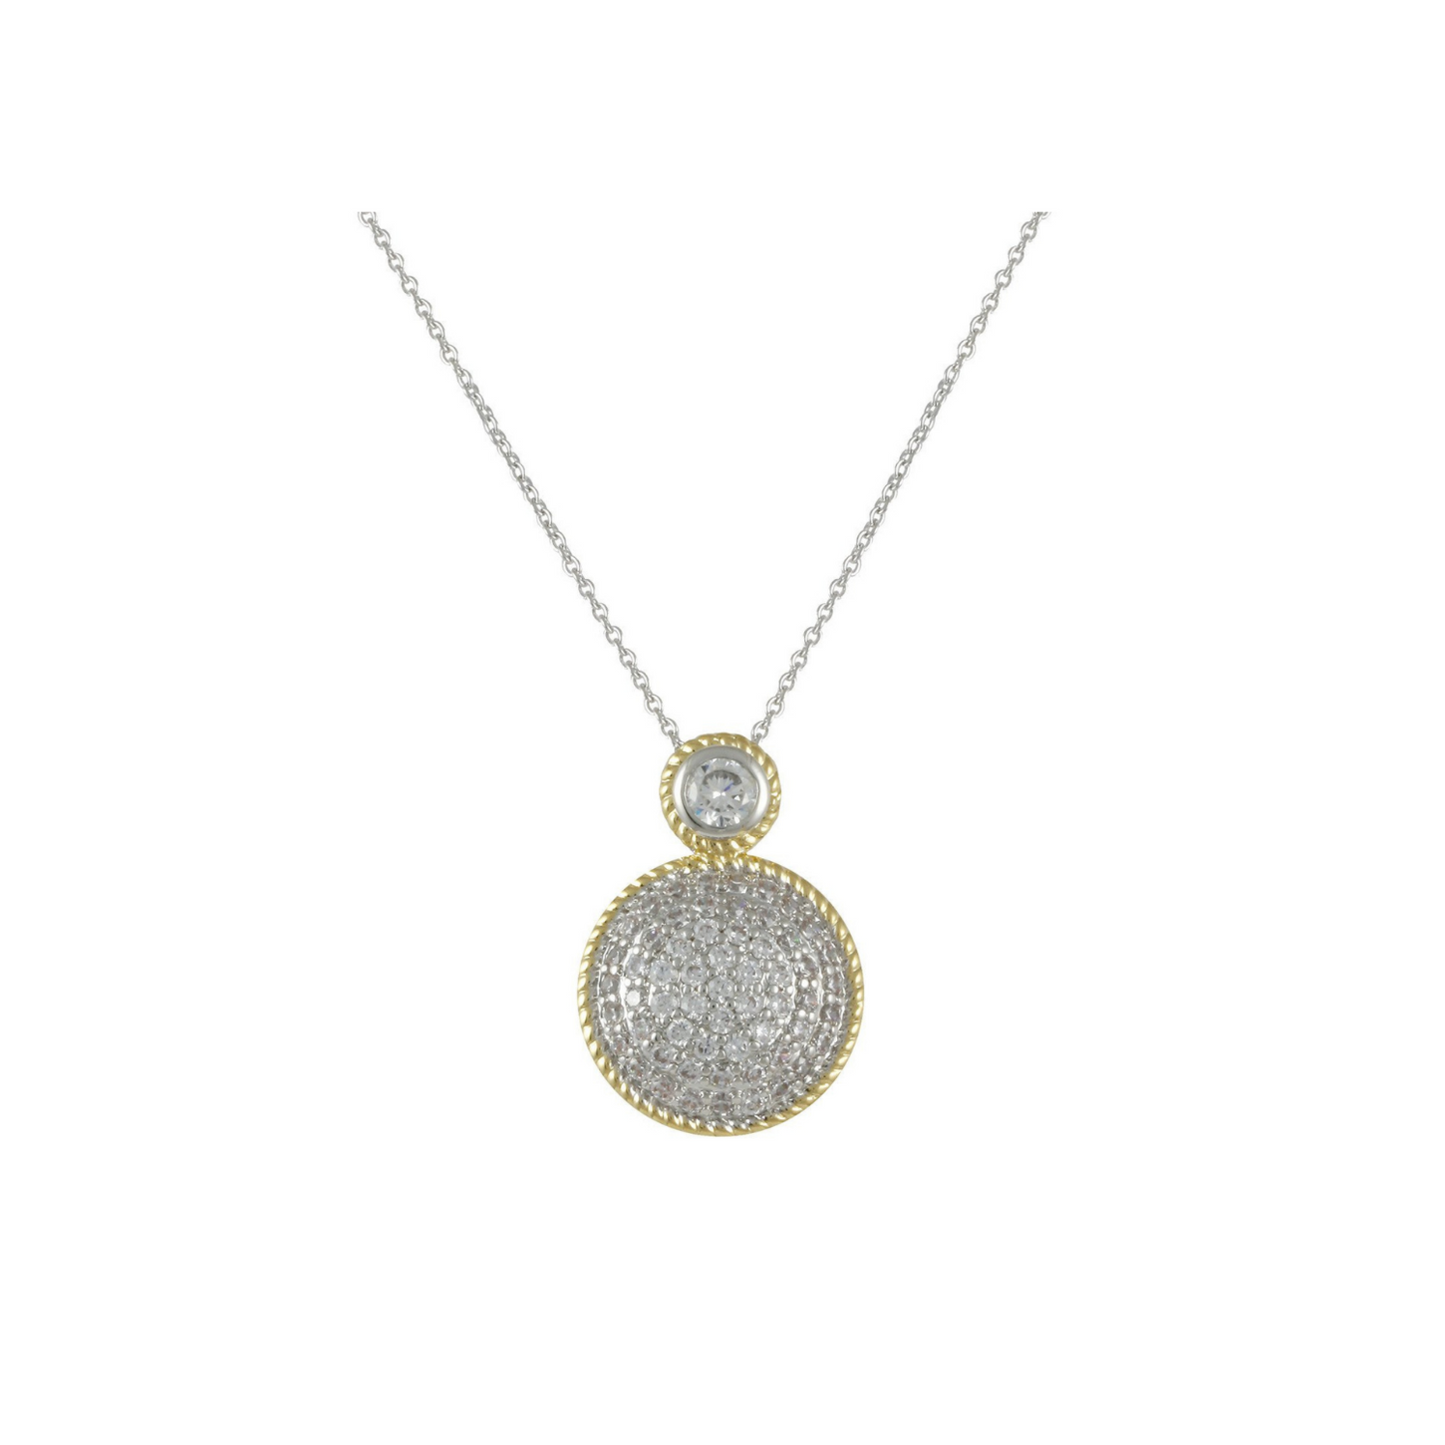 Liz Pave CZ Diamond Circle Pendant Necklace, 2-Tone Silver & Gold - Zahra Jewelry